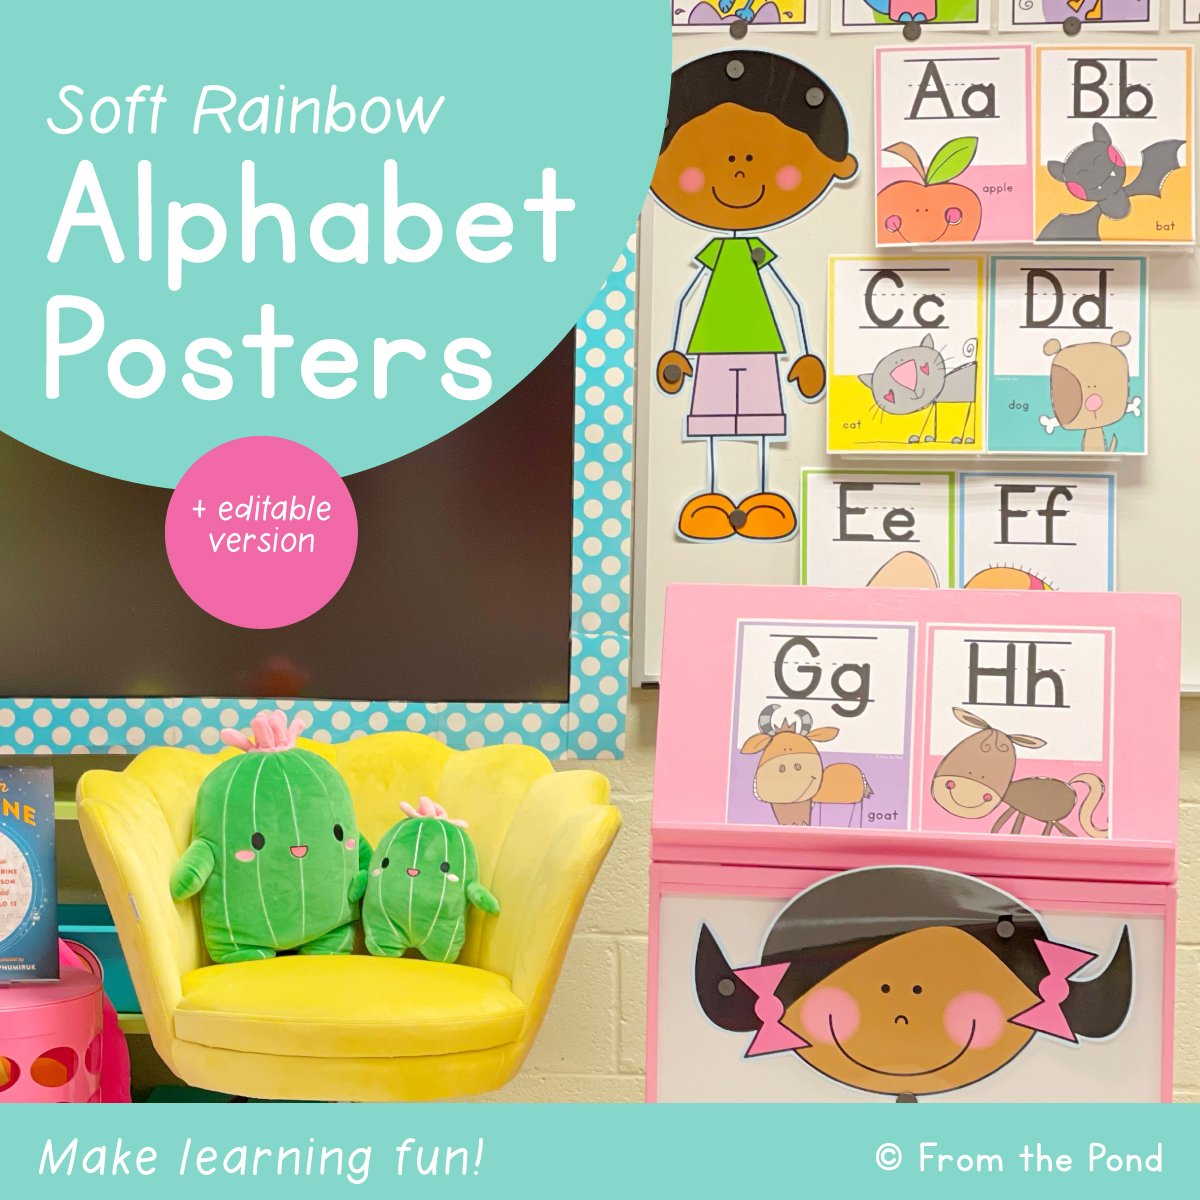 soft-rainbow-alphabet-posters.jpg